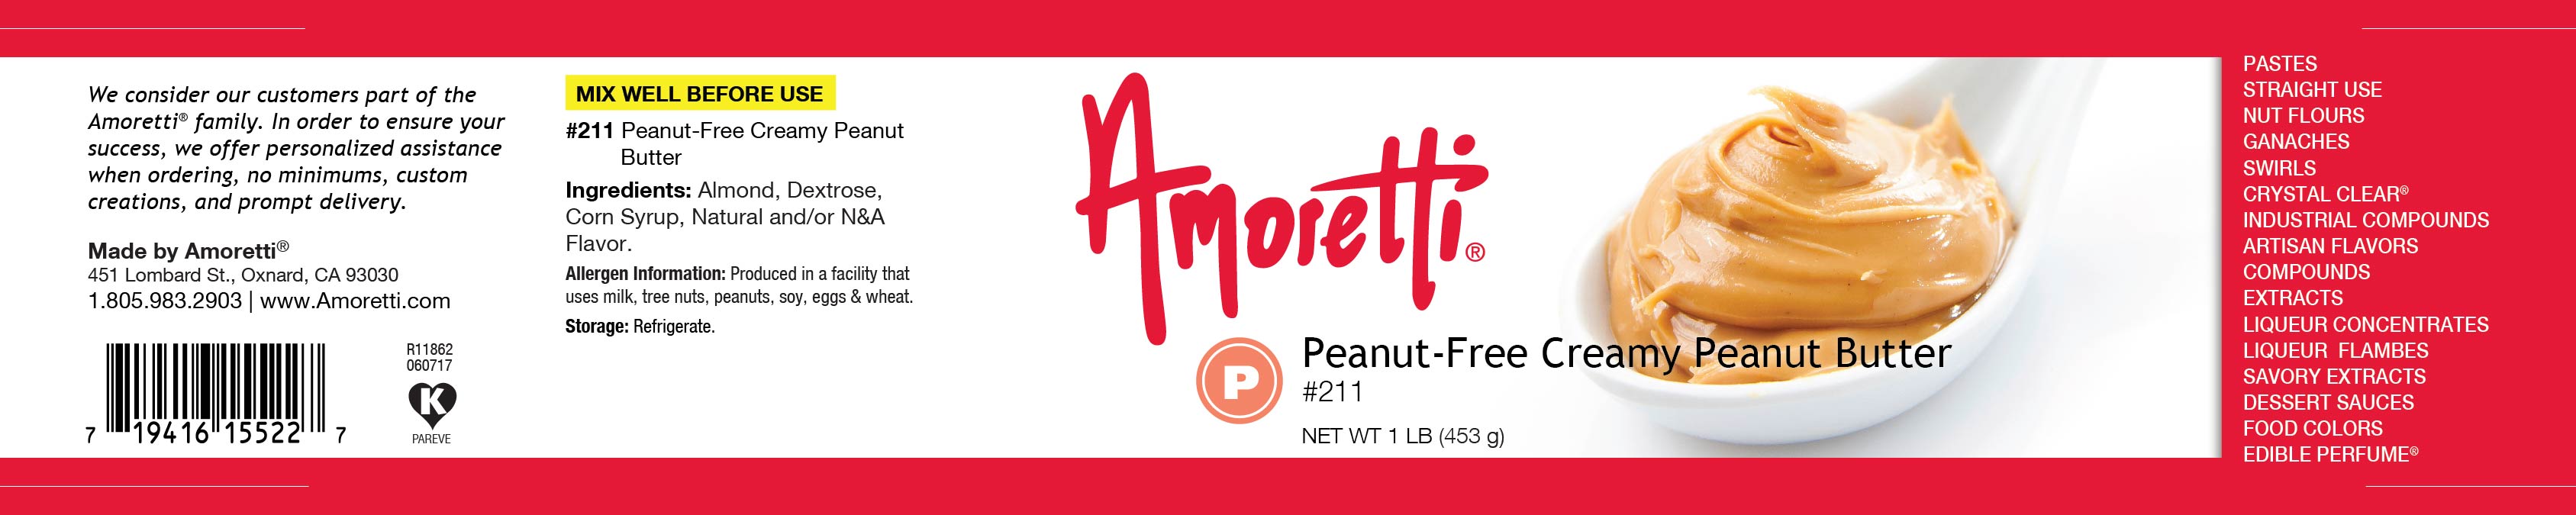 Peanut-Free Creamy Peanut Butter (refrigerate)